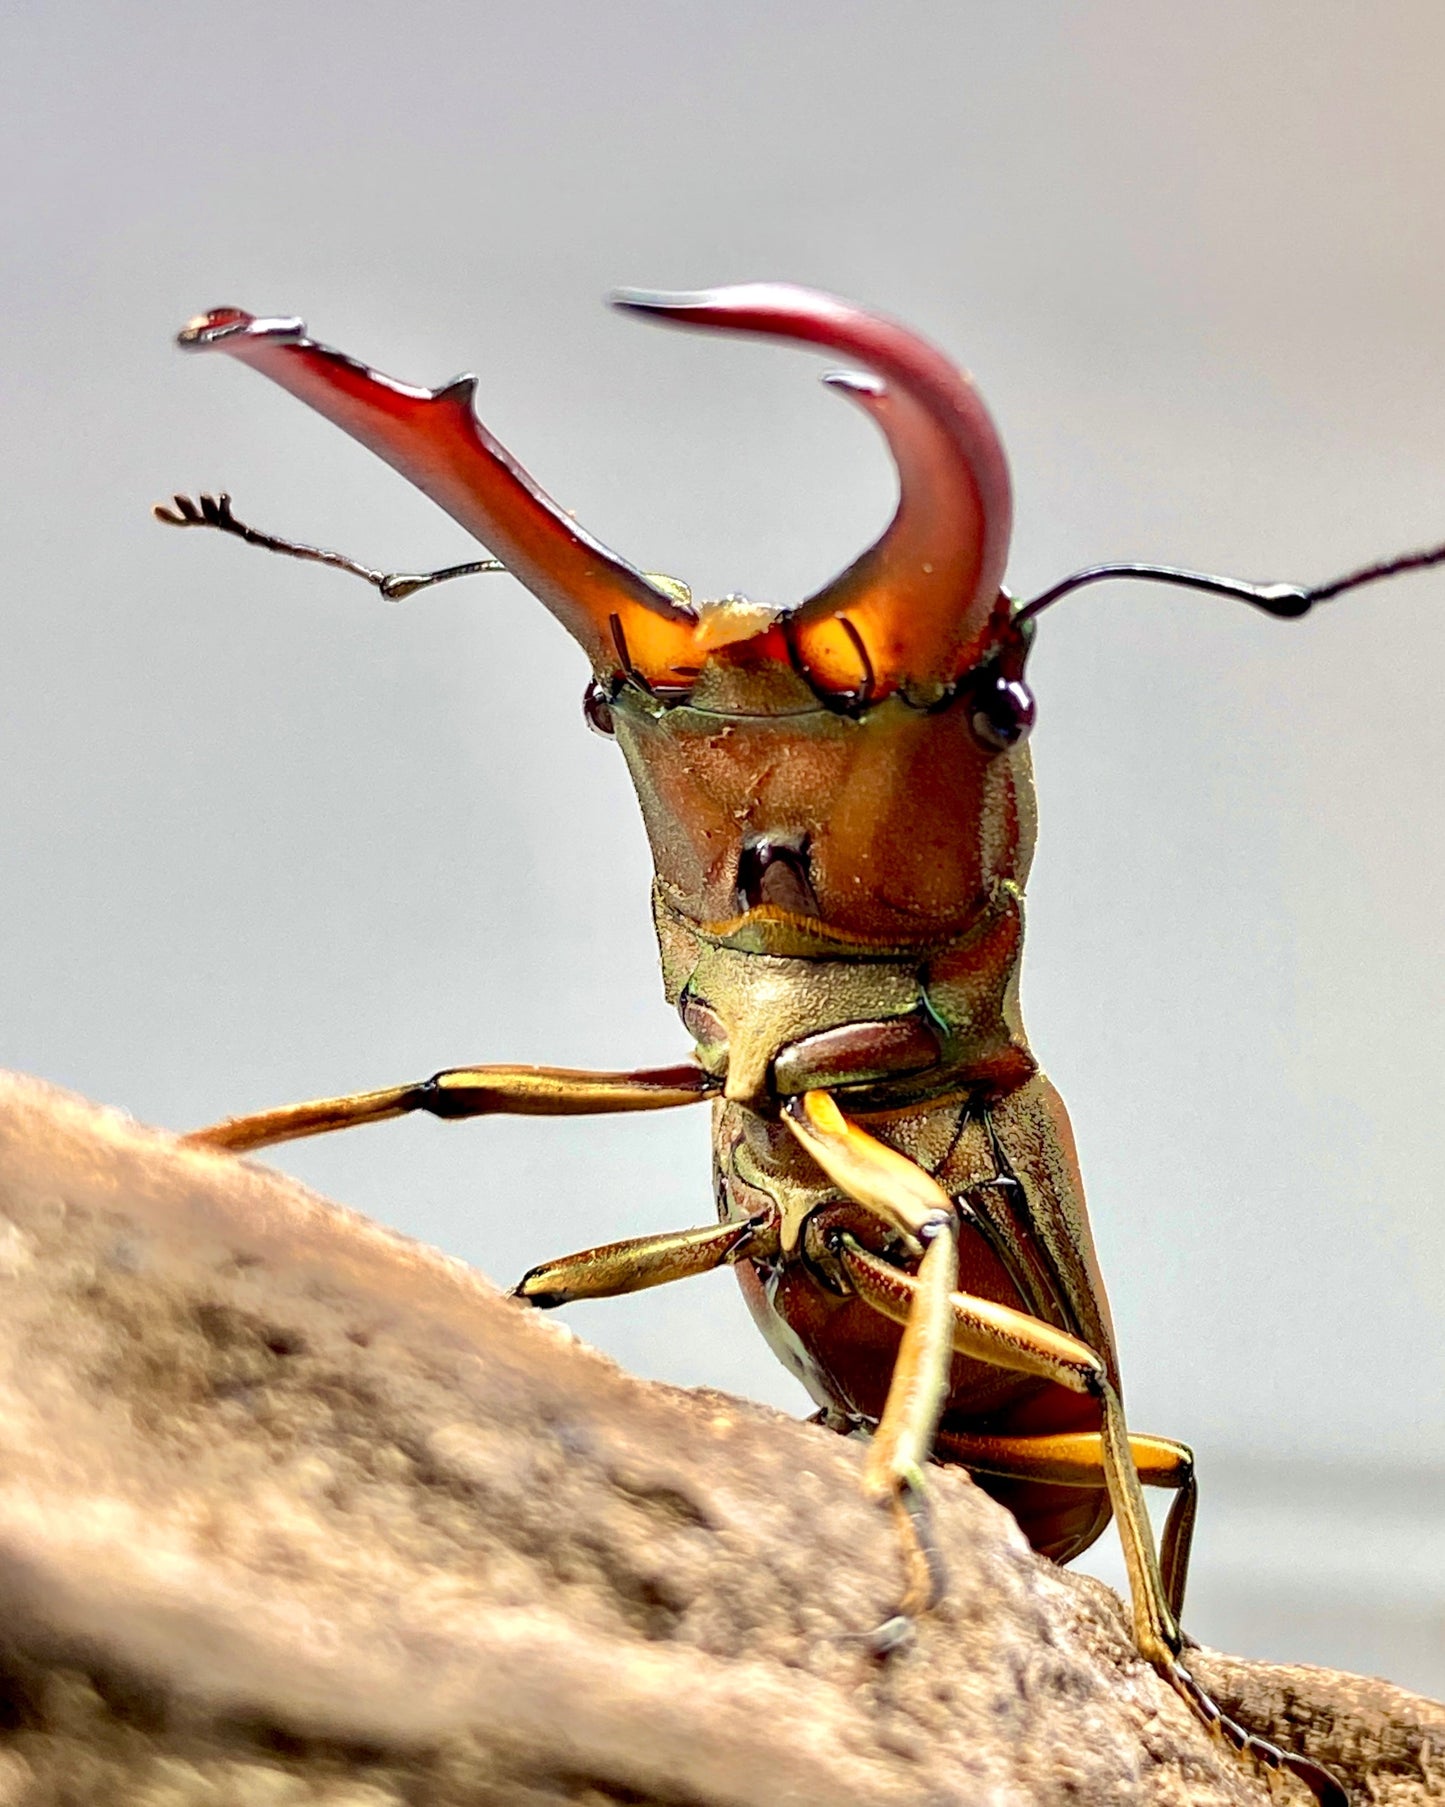 ⨂ Larvae - Taiwanese Stag Beetle, (Cyclommatus mniszechi)